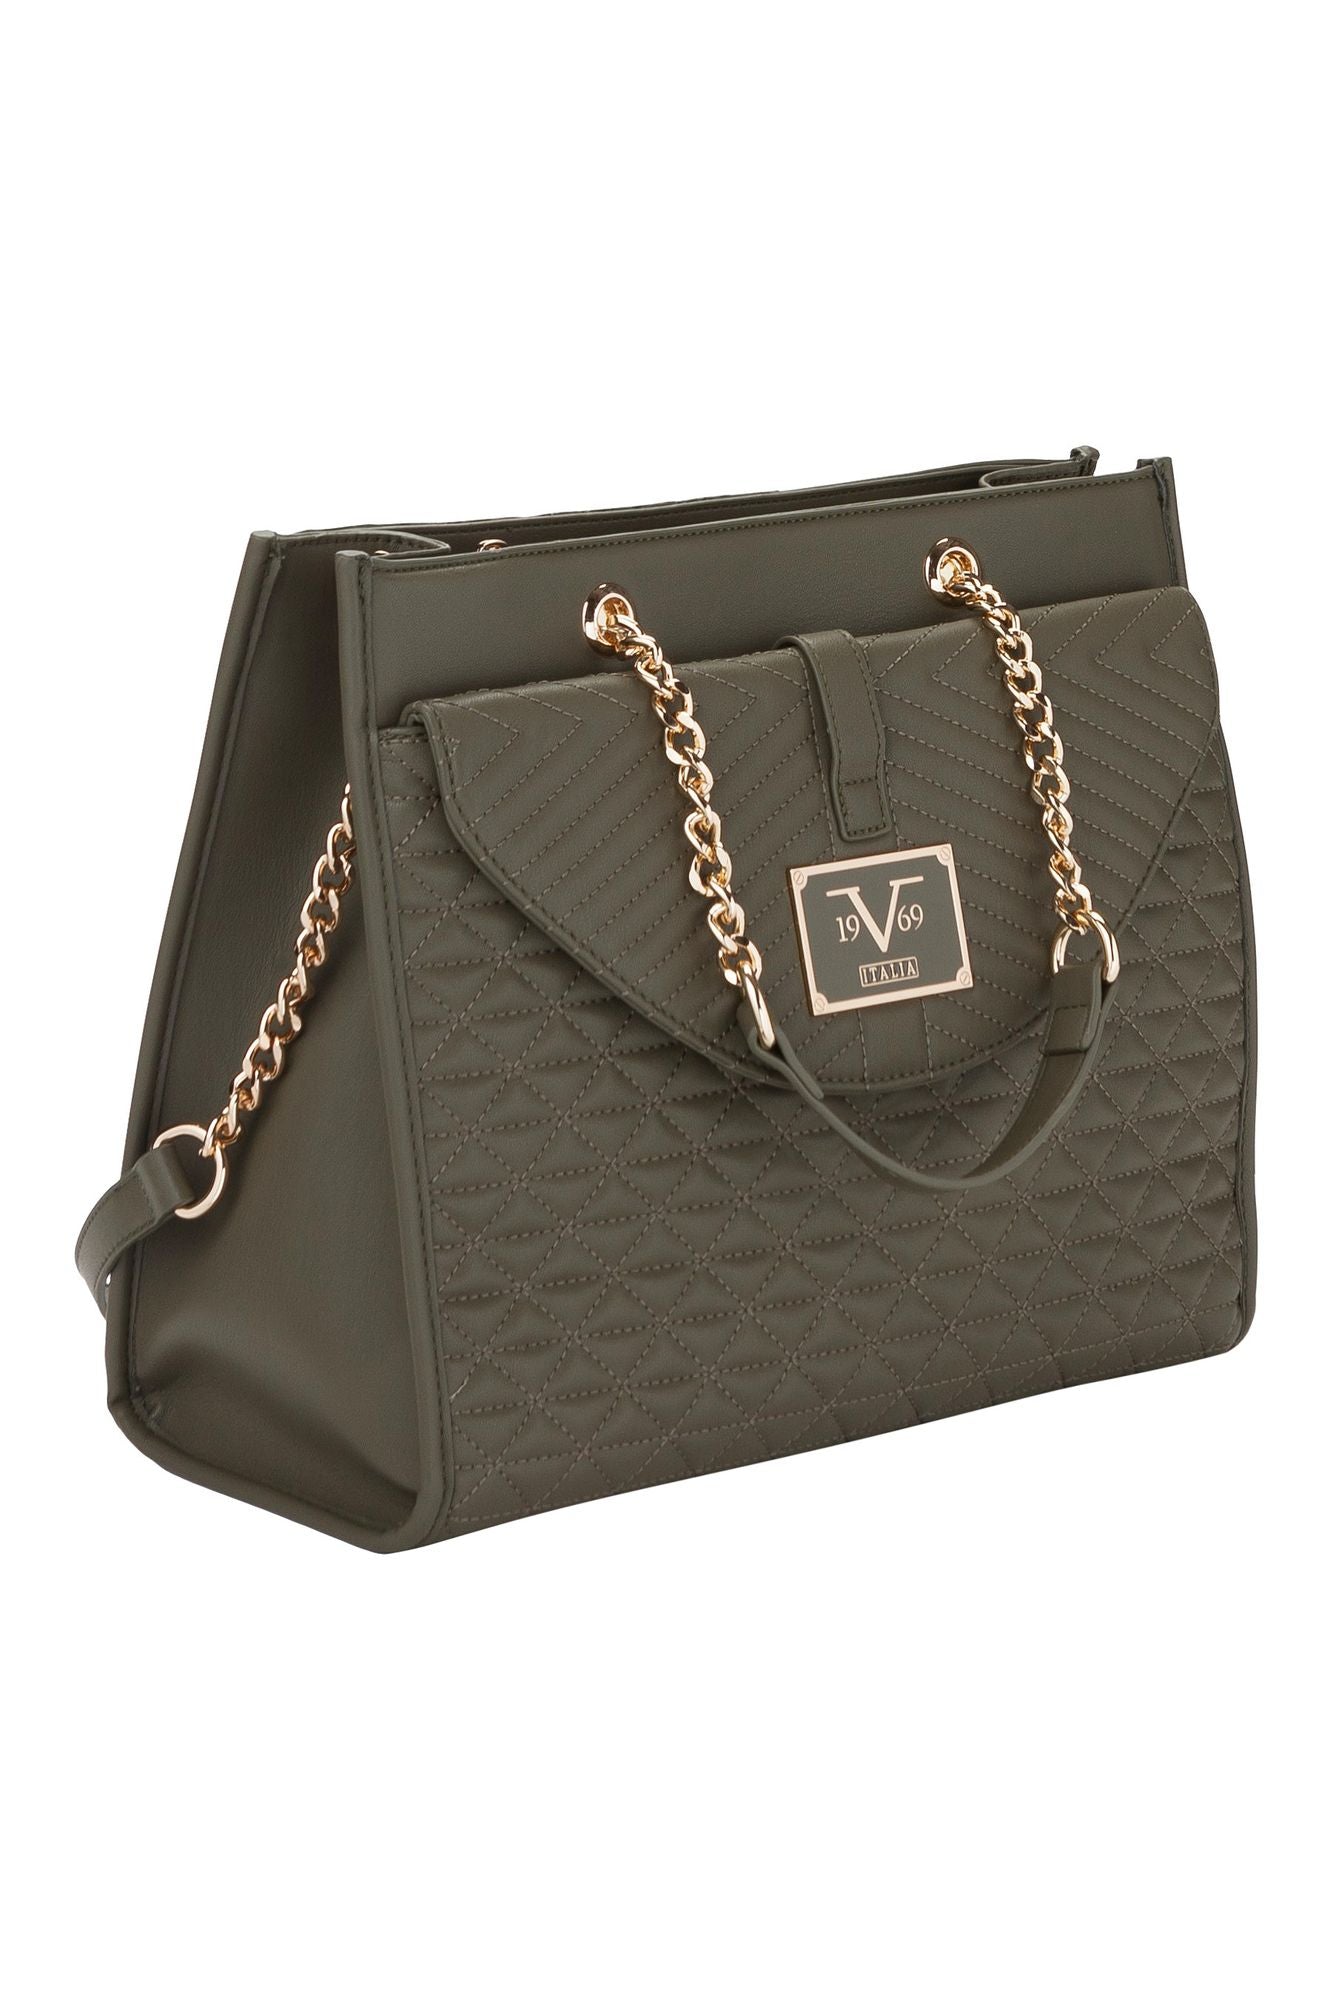 Women's bags - handbags – 19v69-Italia